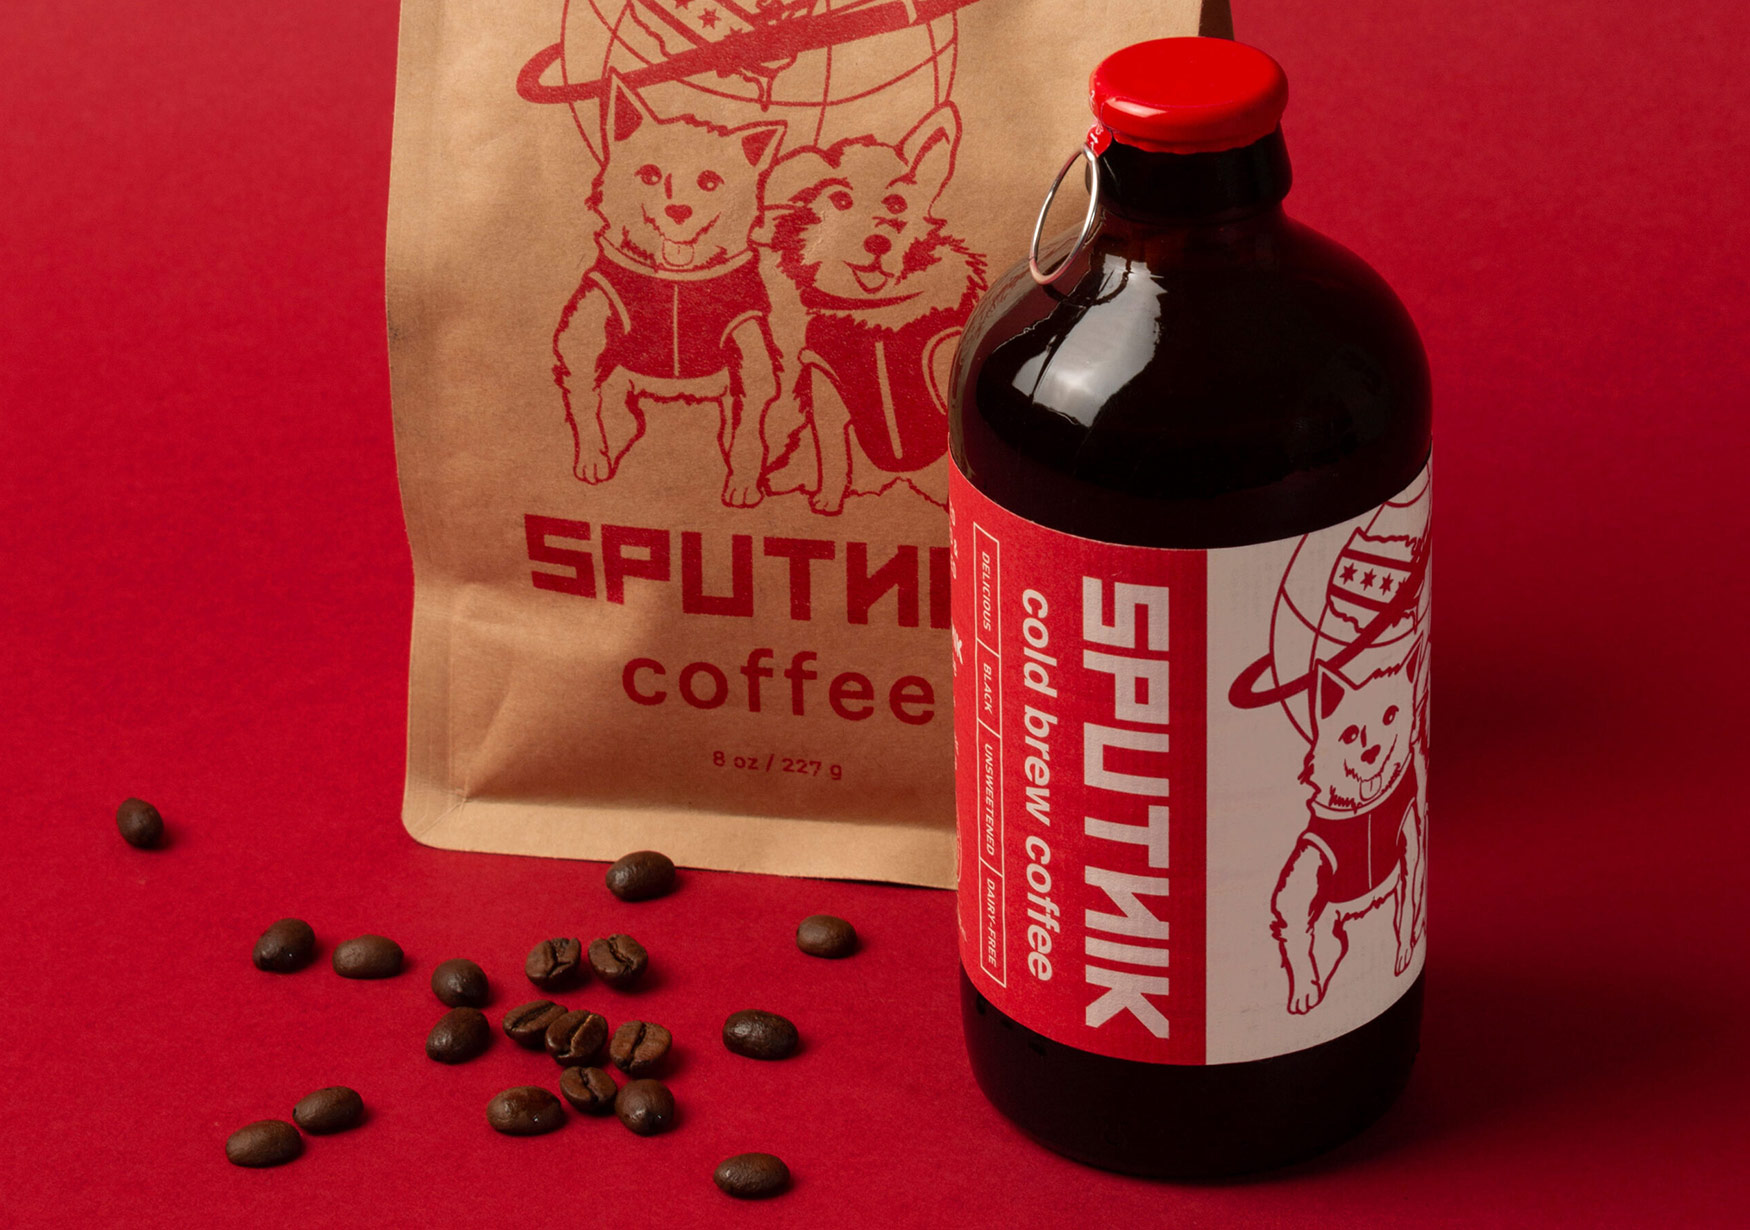 Sputnik Cold Brew Coffee